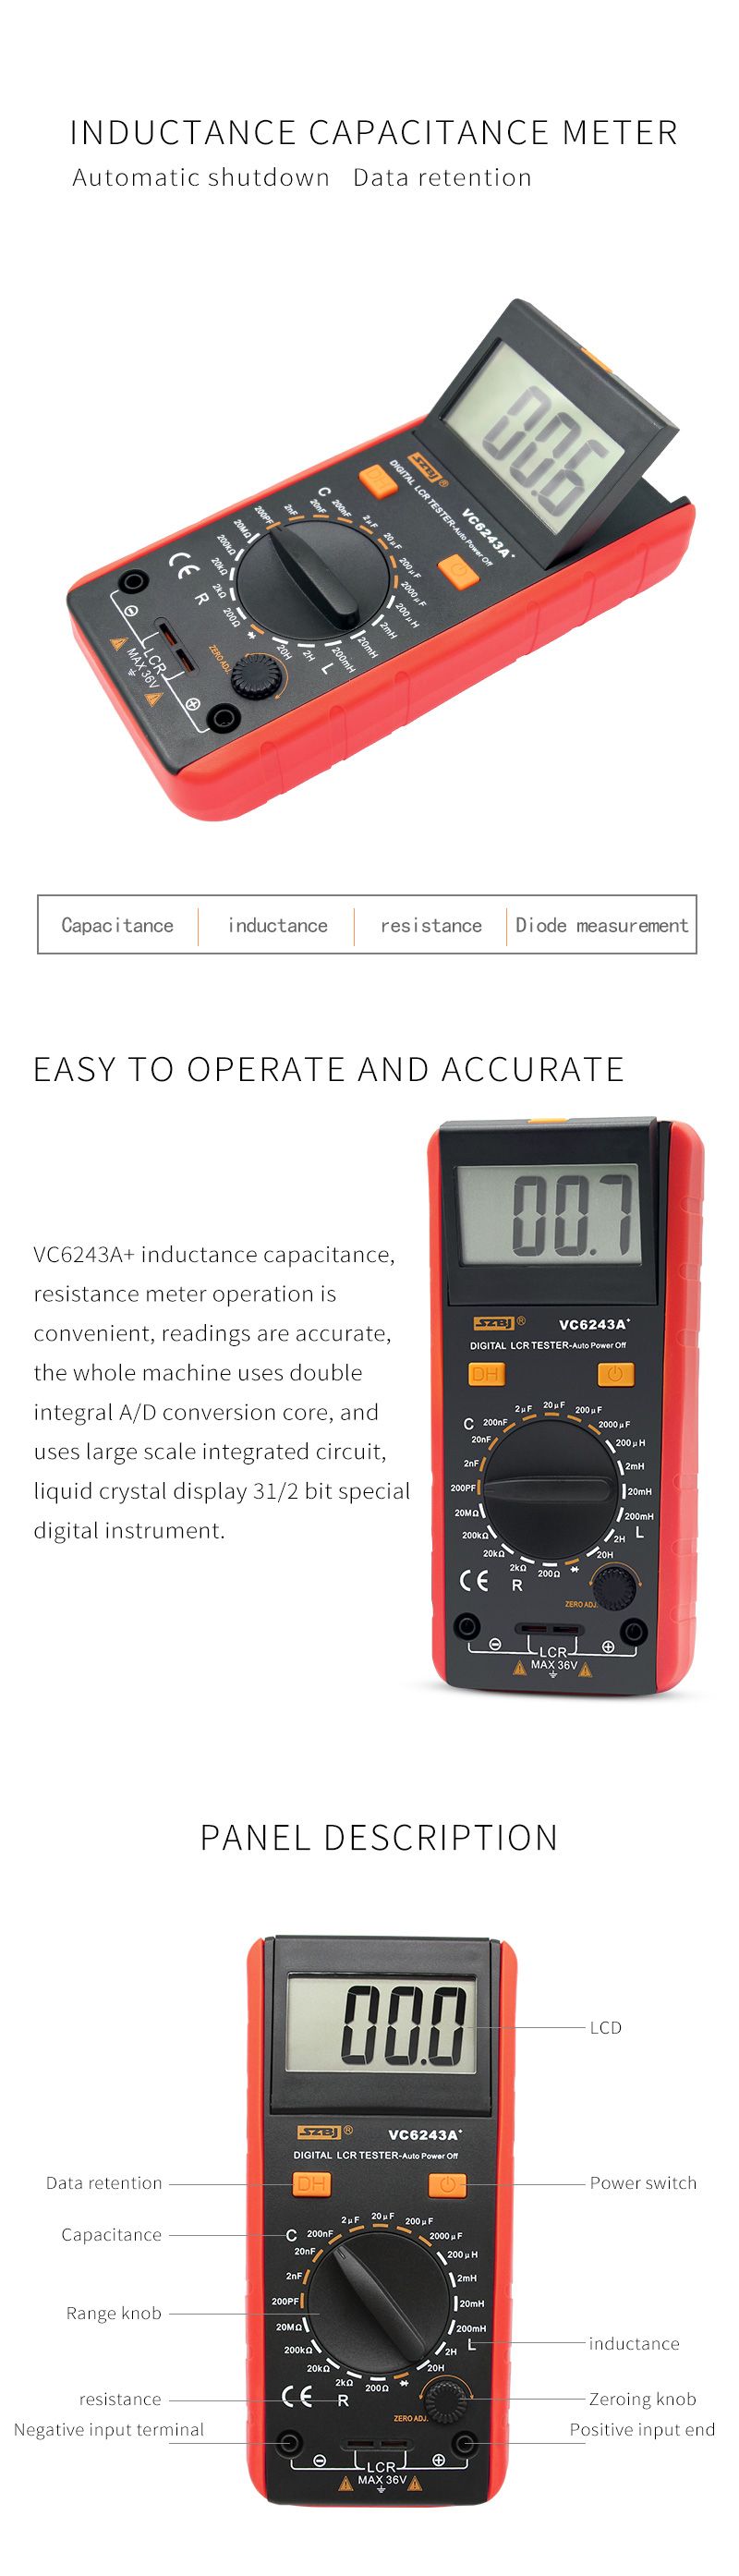 VC6243A-Digital-LCD-Meter-Inductance-Capacitance-Resistance-Tester-Multimeter-Crocodile-Clip-Measuri-1526250